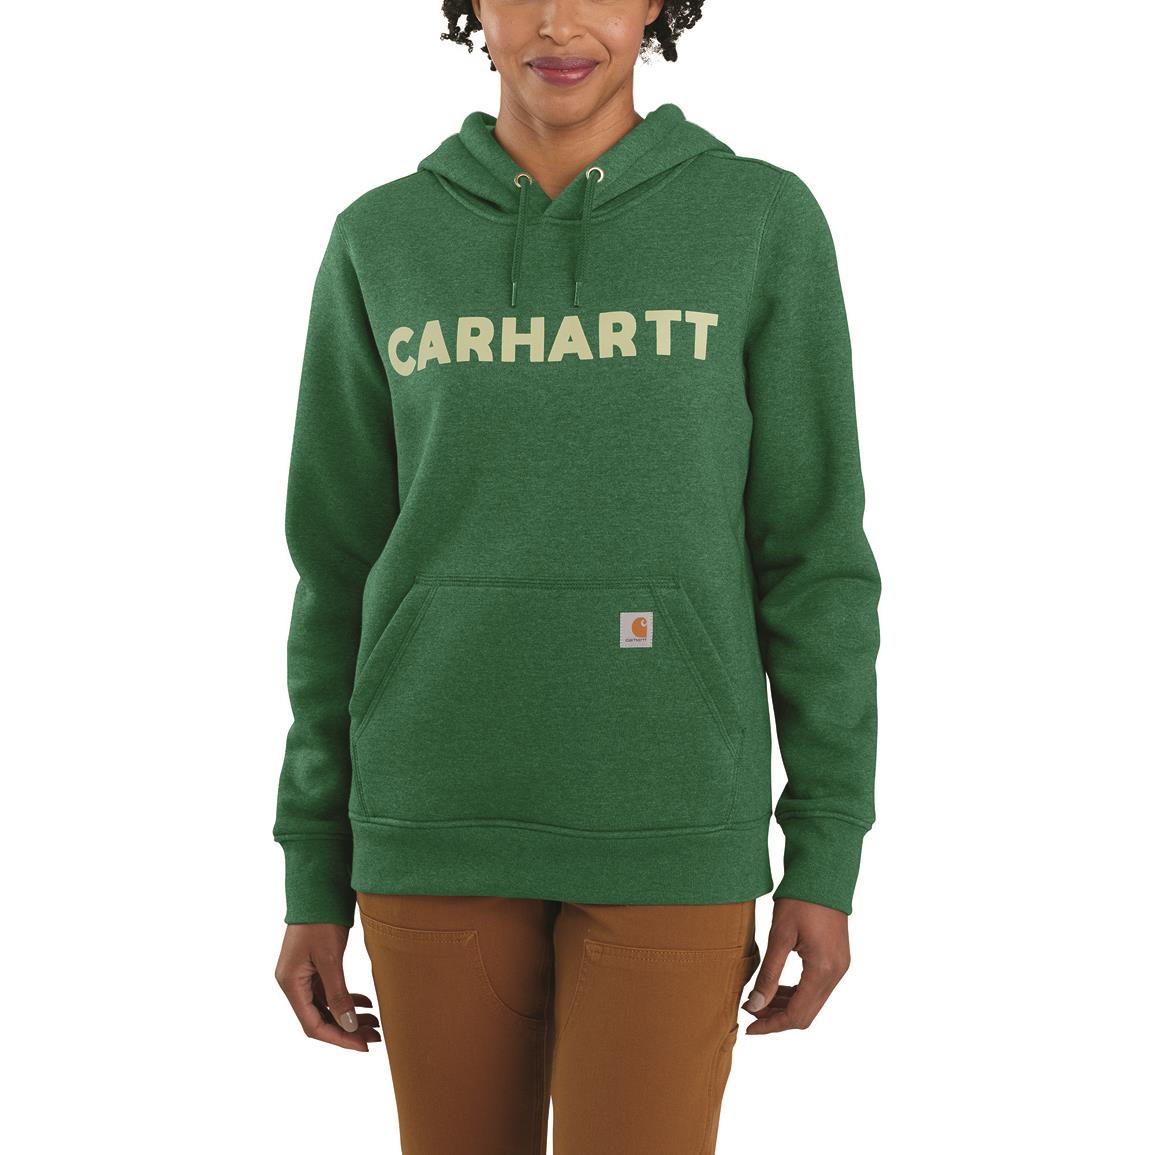 Carhartt Women's Logo Graphic Hoodie, North Woods Heather